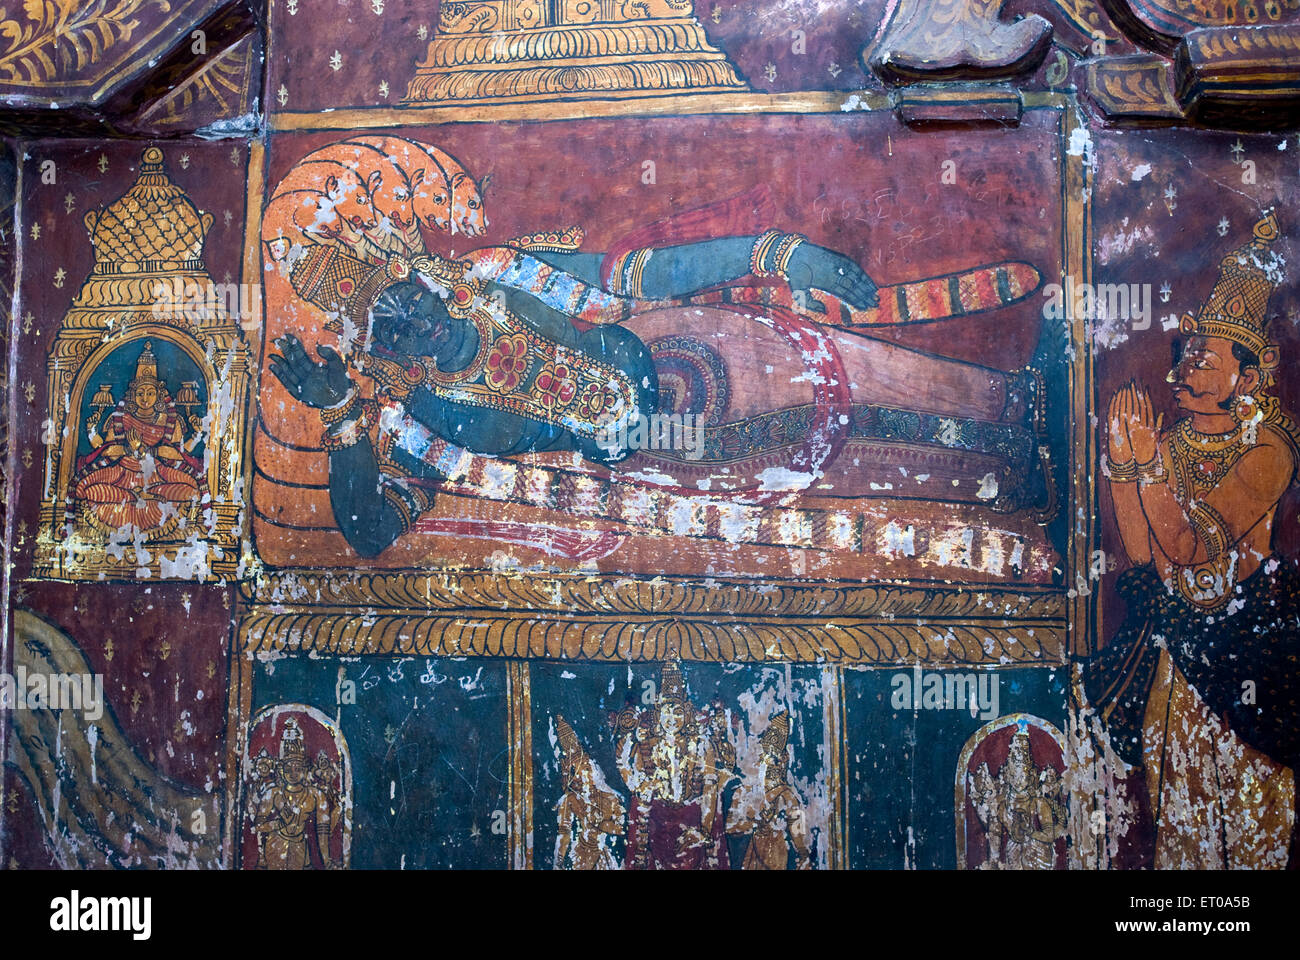 Xvii secolo murales sulla parete in Varadaraja Perumal Vishnu tempio di Kanchipuram ; Tamil Nadu ; India Foto Stock